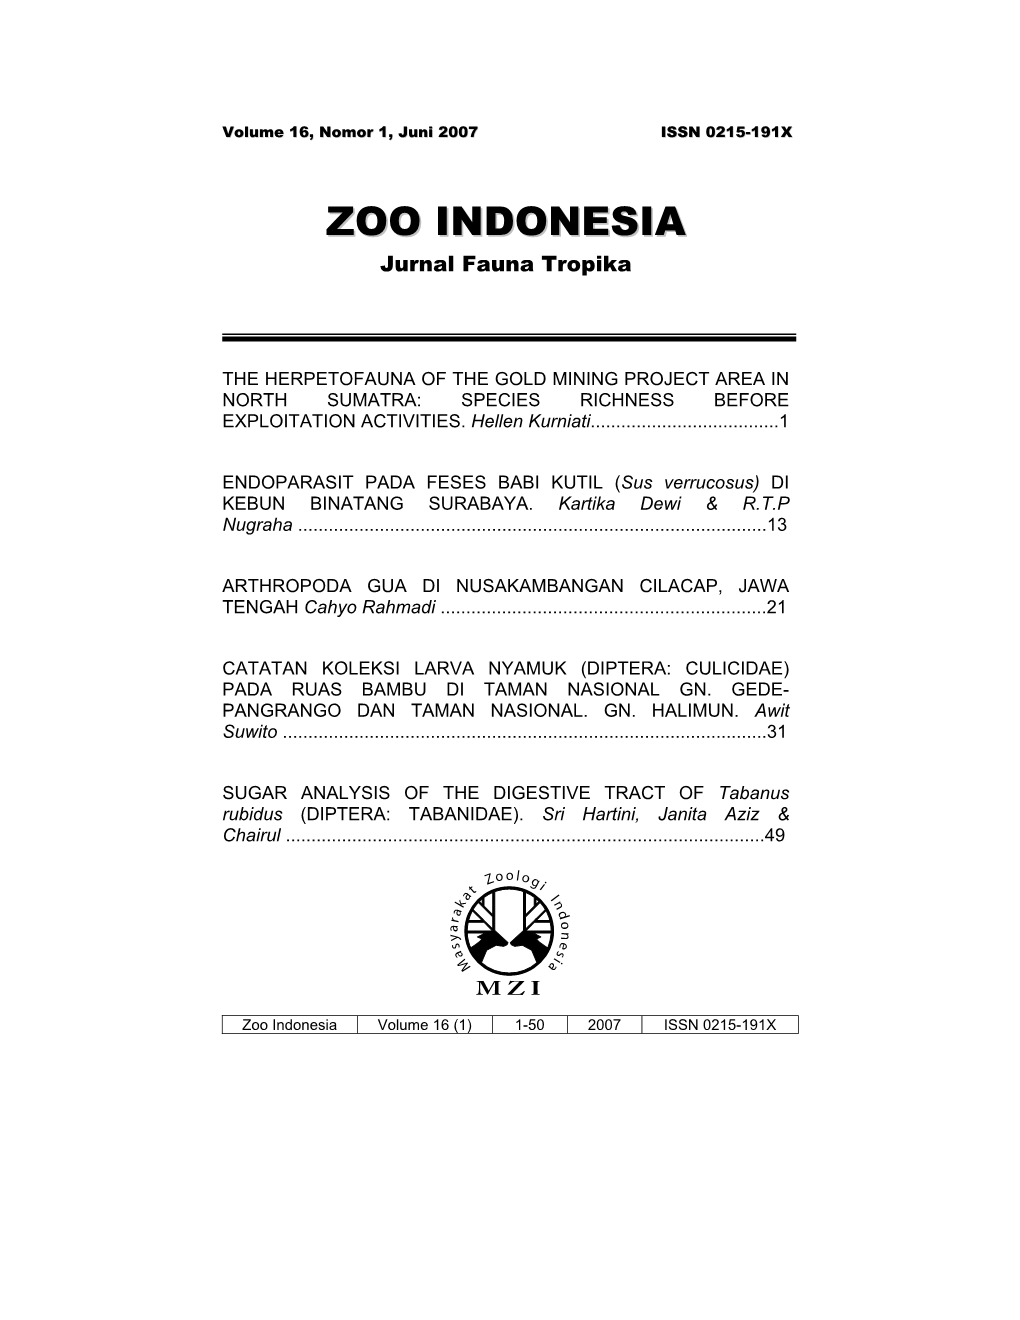 Zoo Indonesia Volume 16 (1) 1-50 2007 ISSN 0215-191X